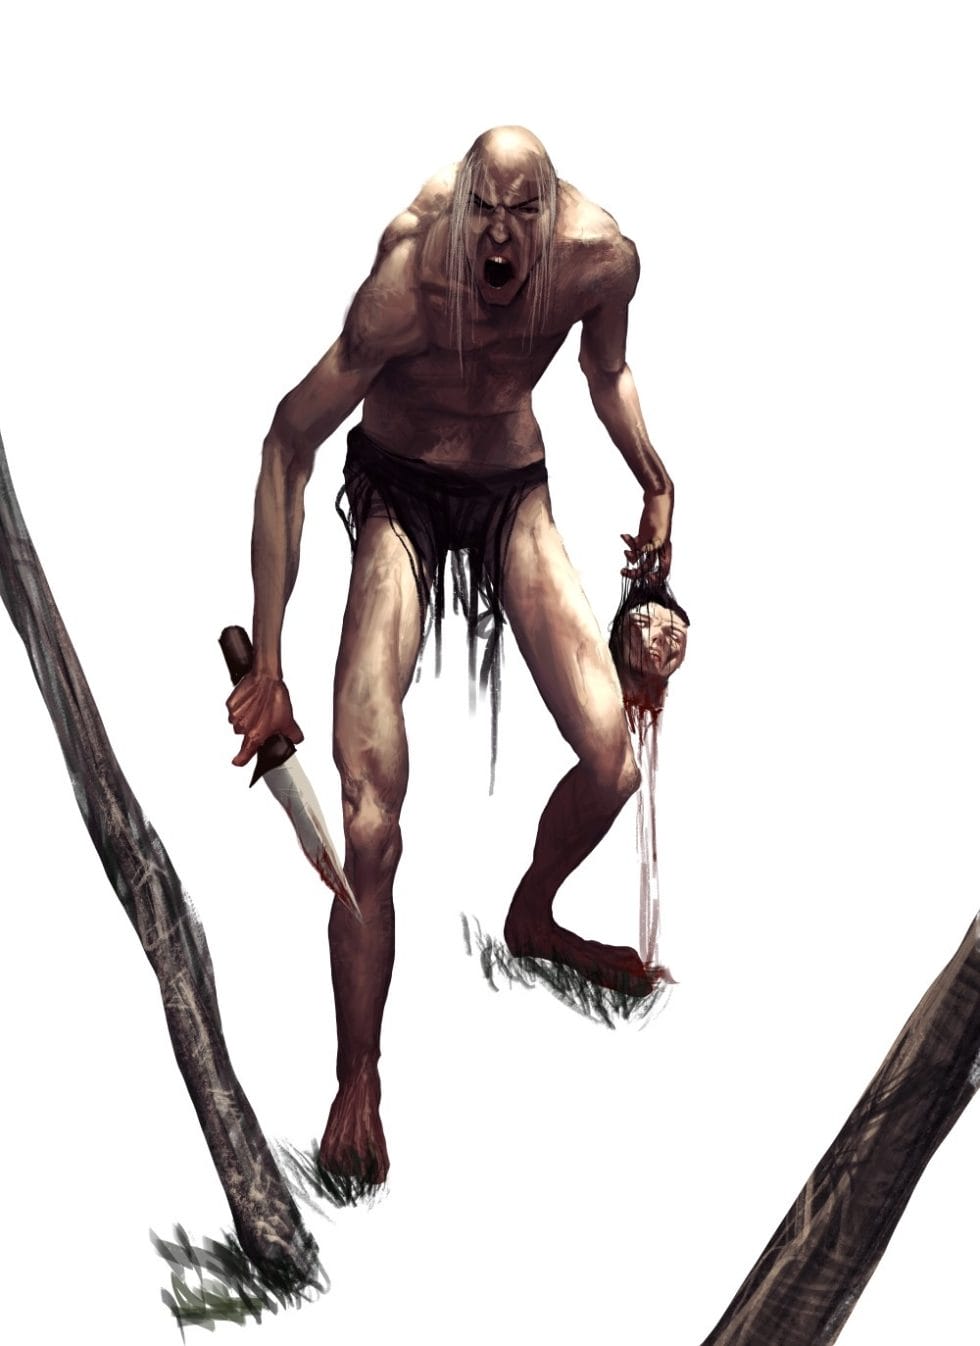 bog troll raider - zombie_ju-ju_creature__vito_rafiie